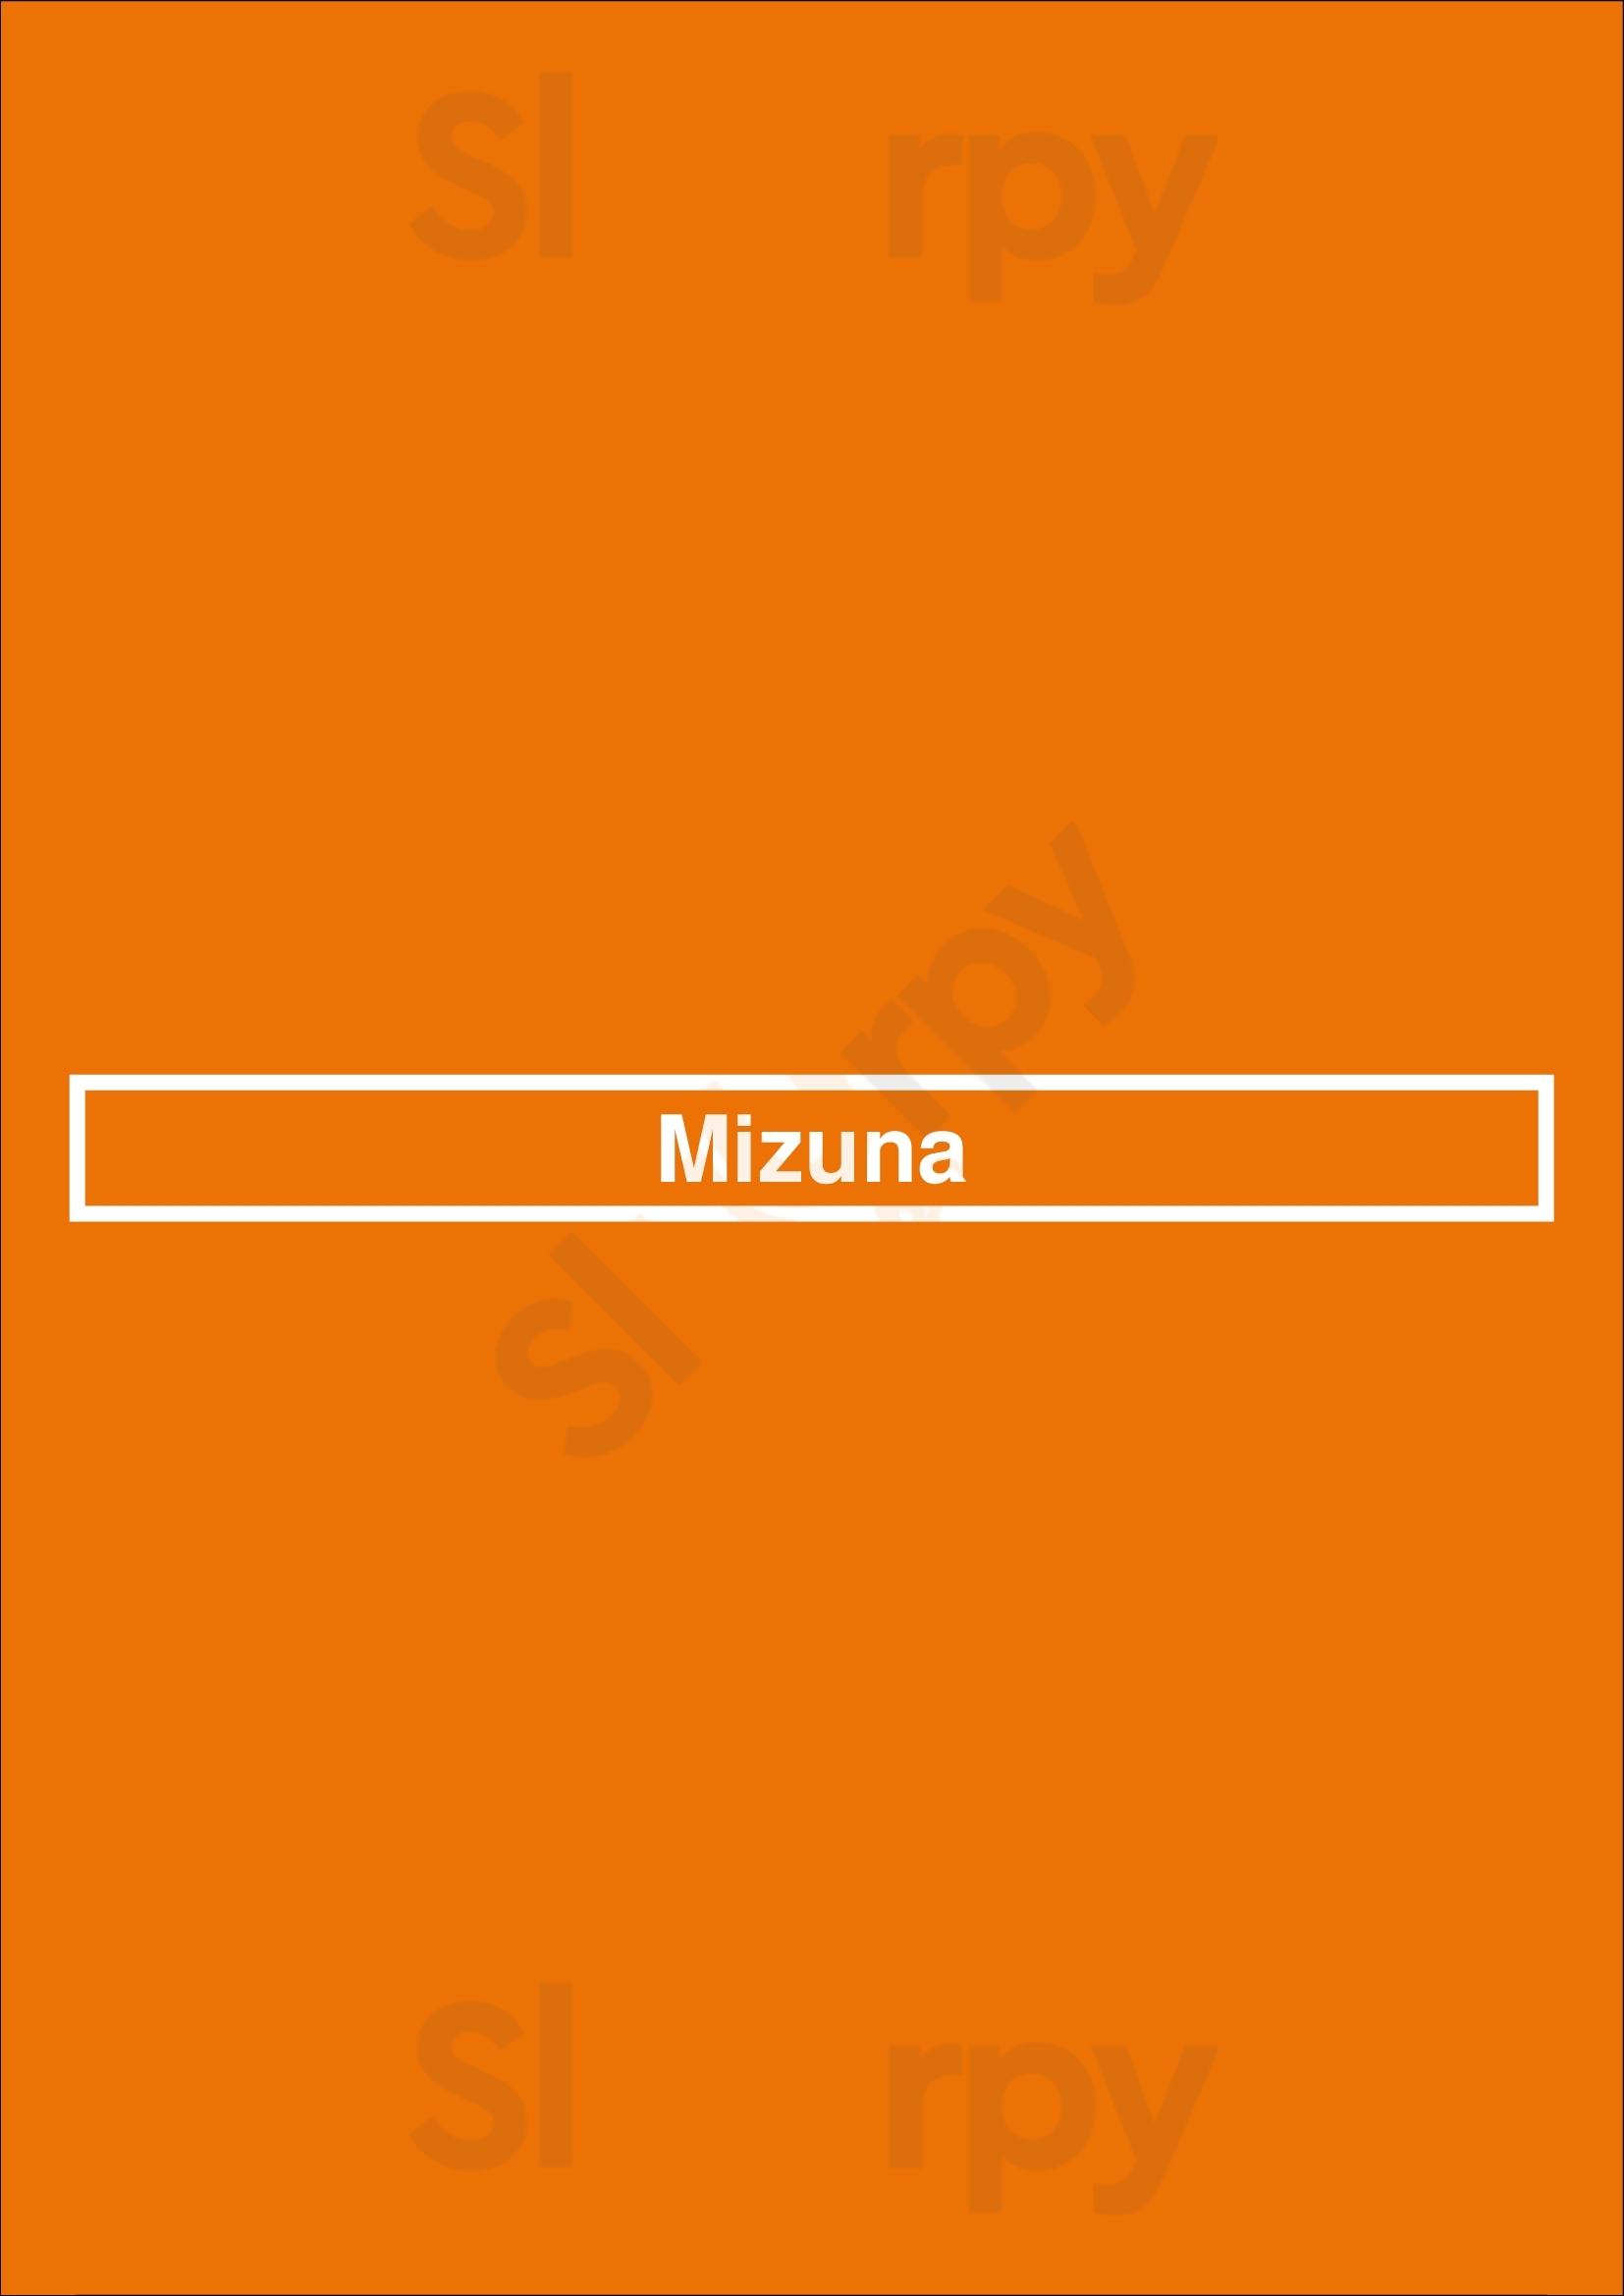 Mizuna Denver Menu - 1